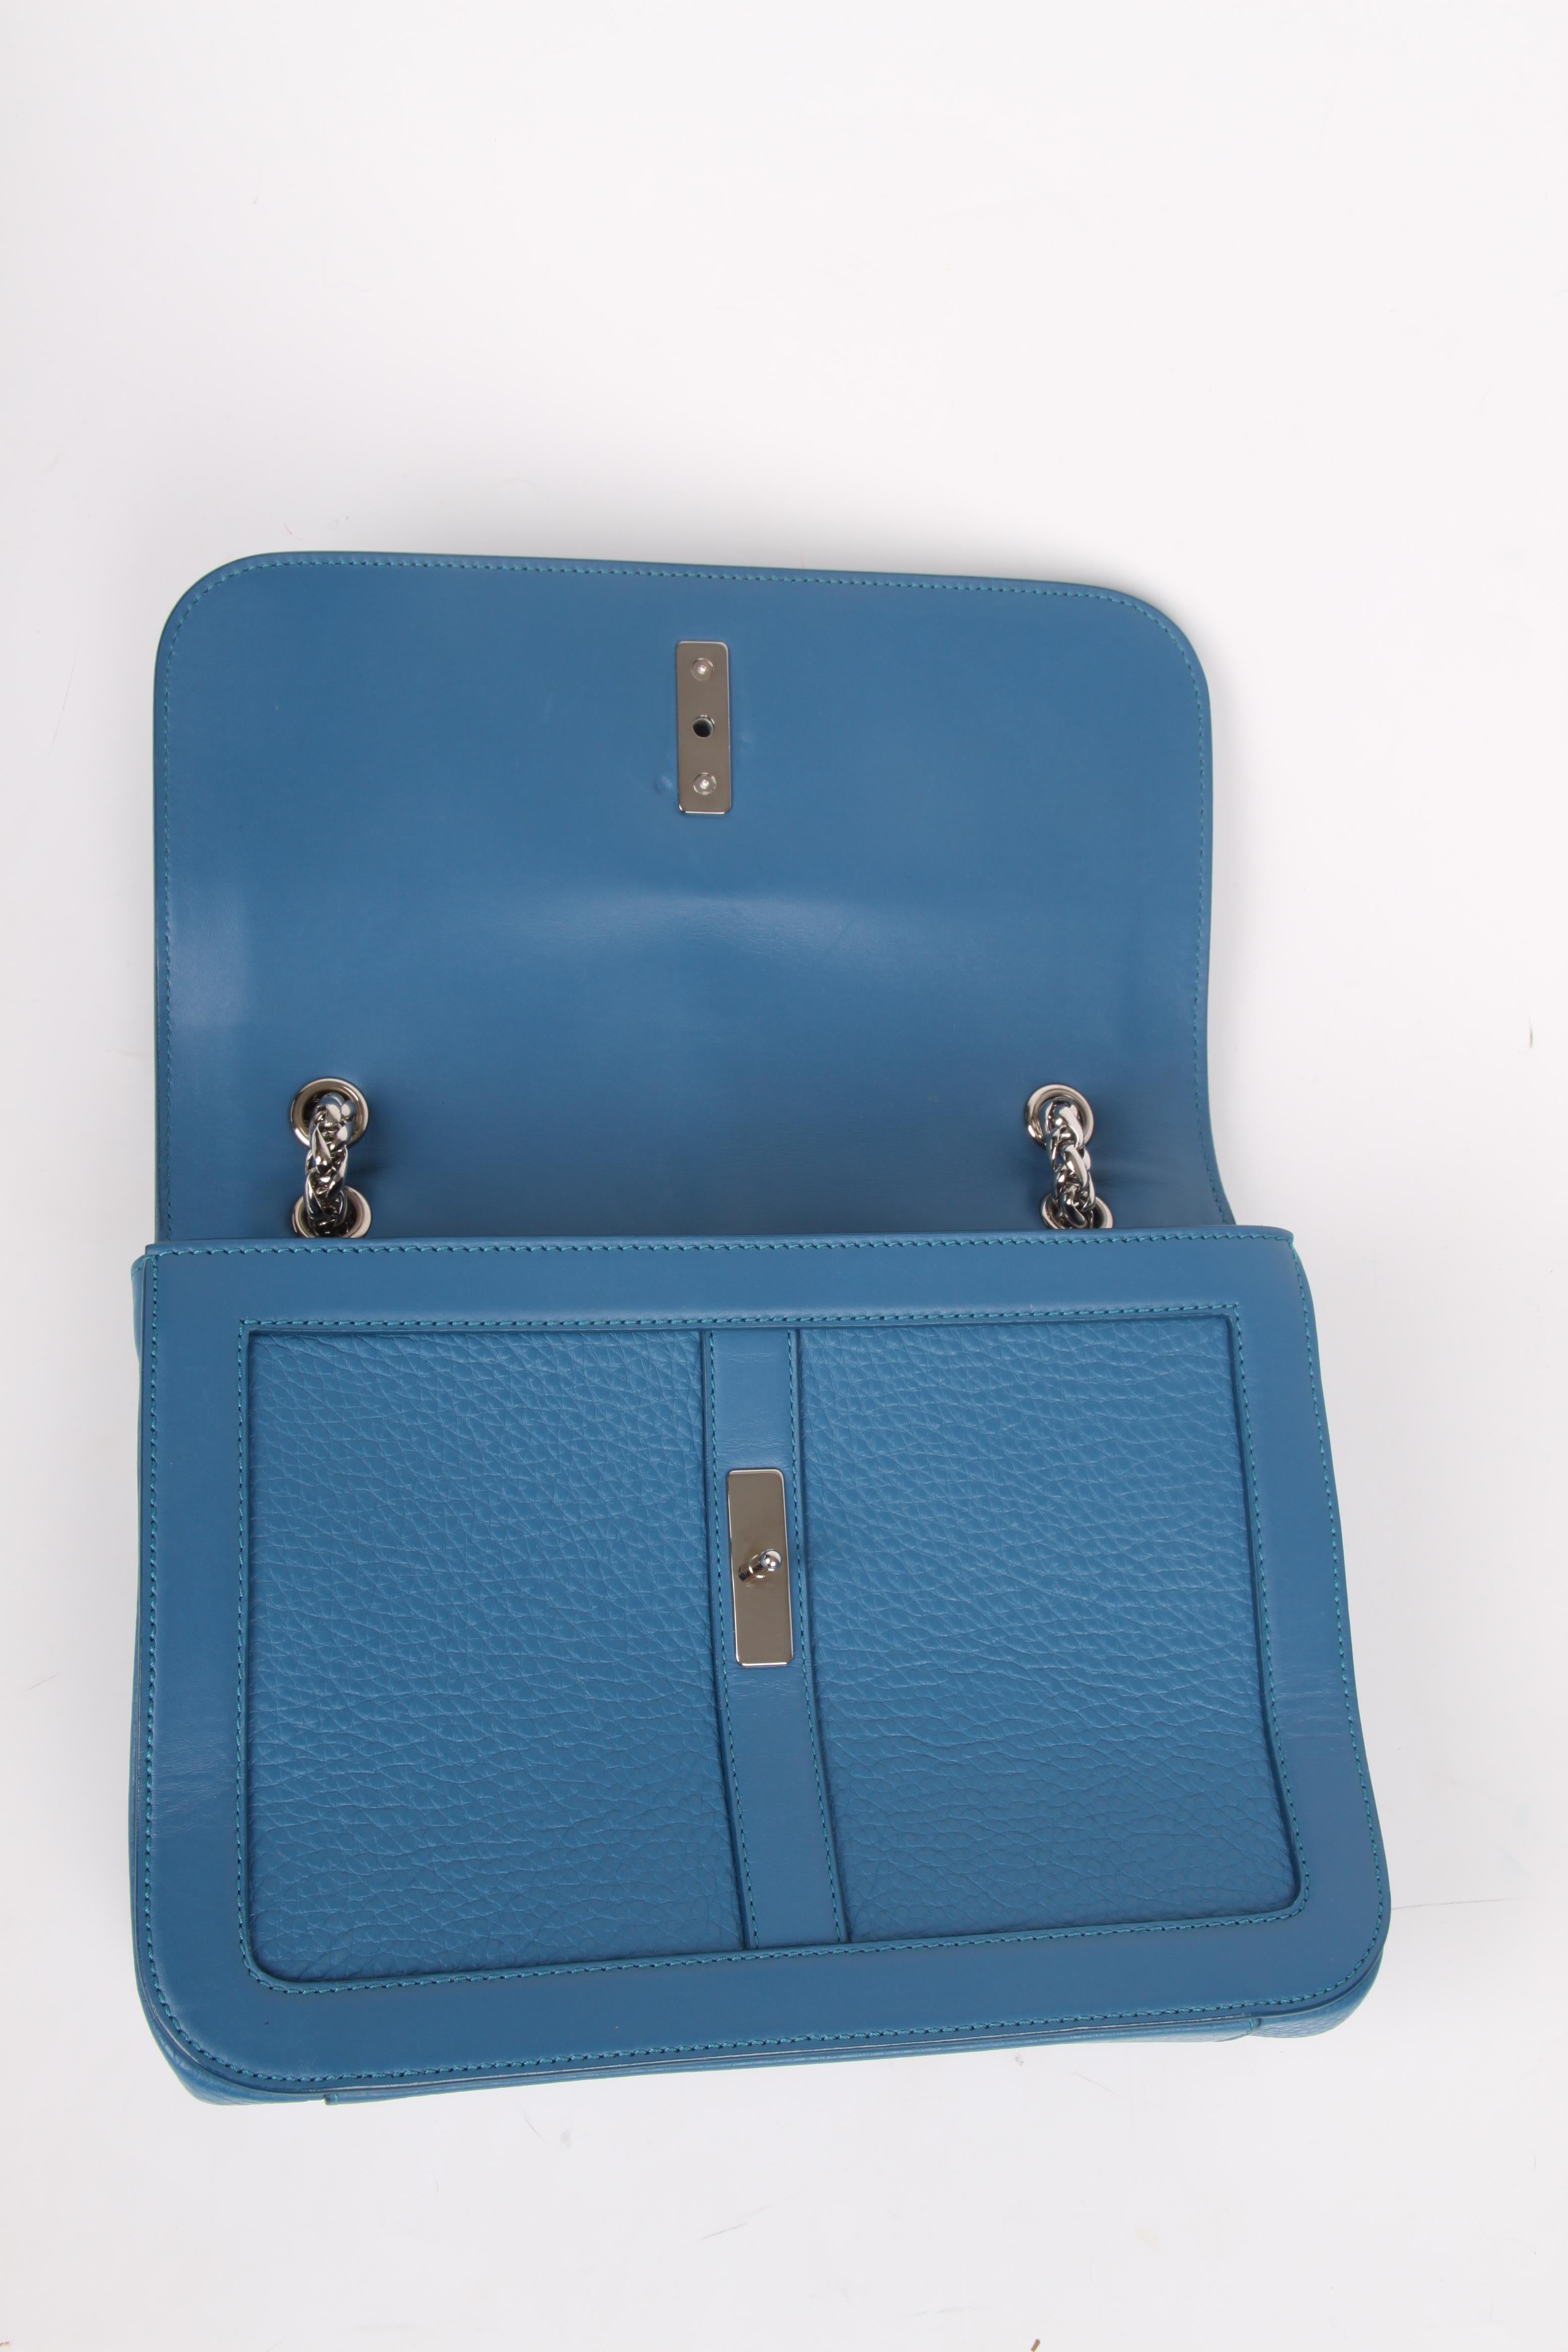 Louboutin Sweet Charity Bag - blue 3